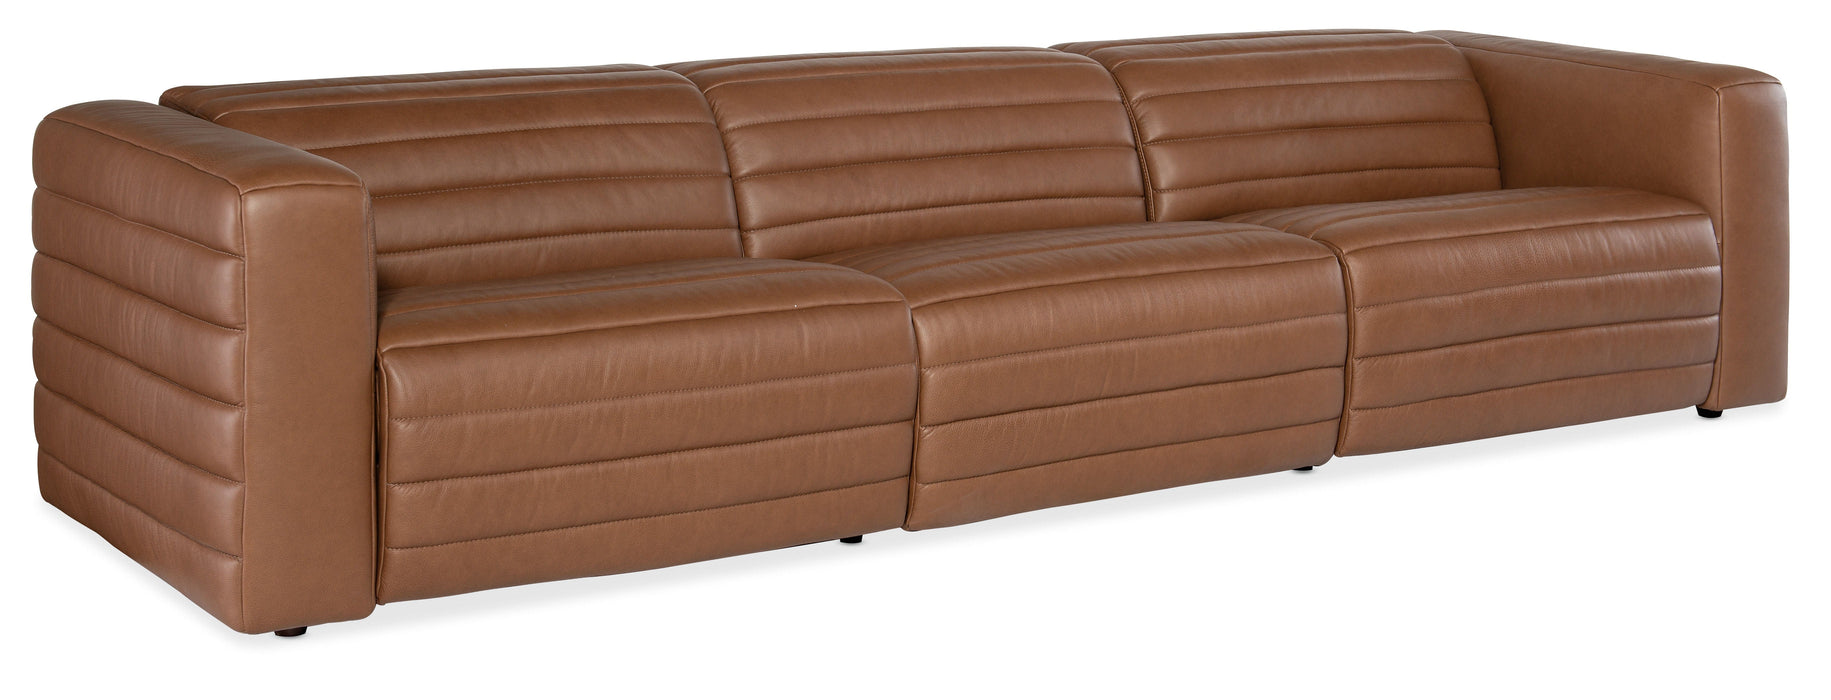 Chatelain 3-Piece Power Sofa With Power Headrest